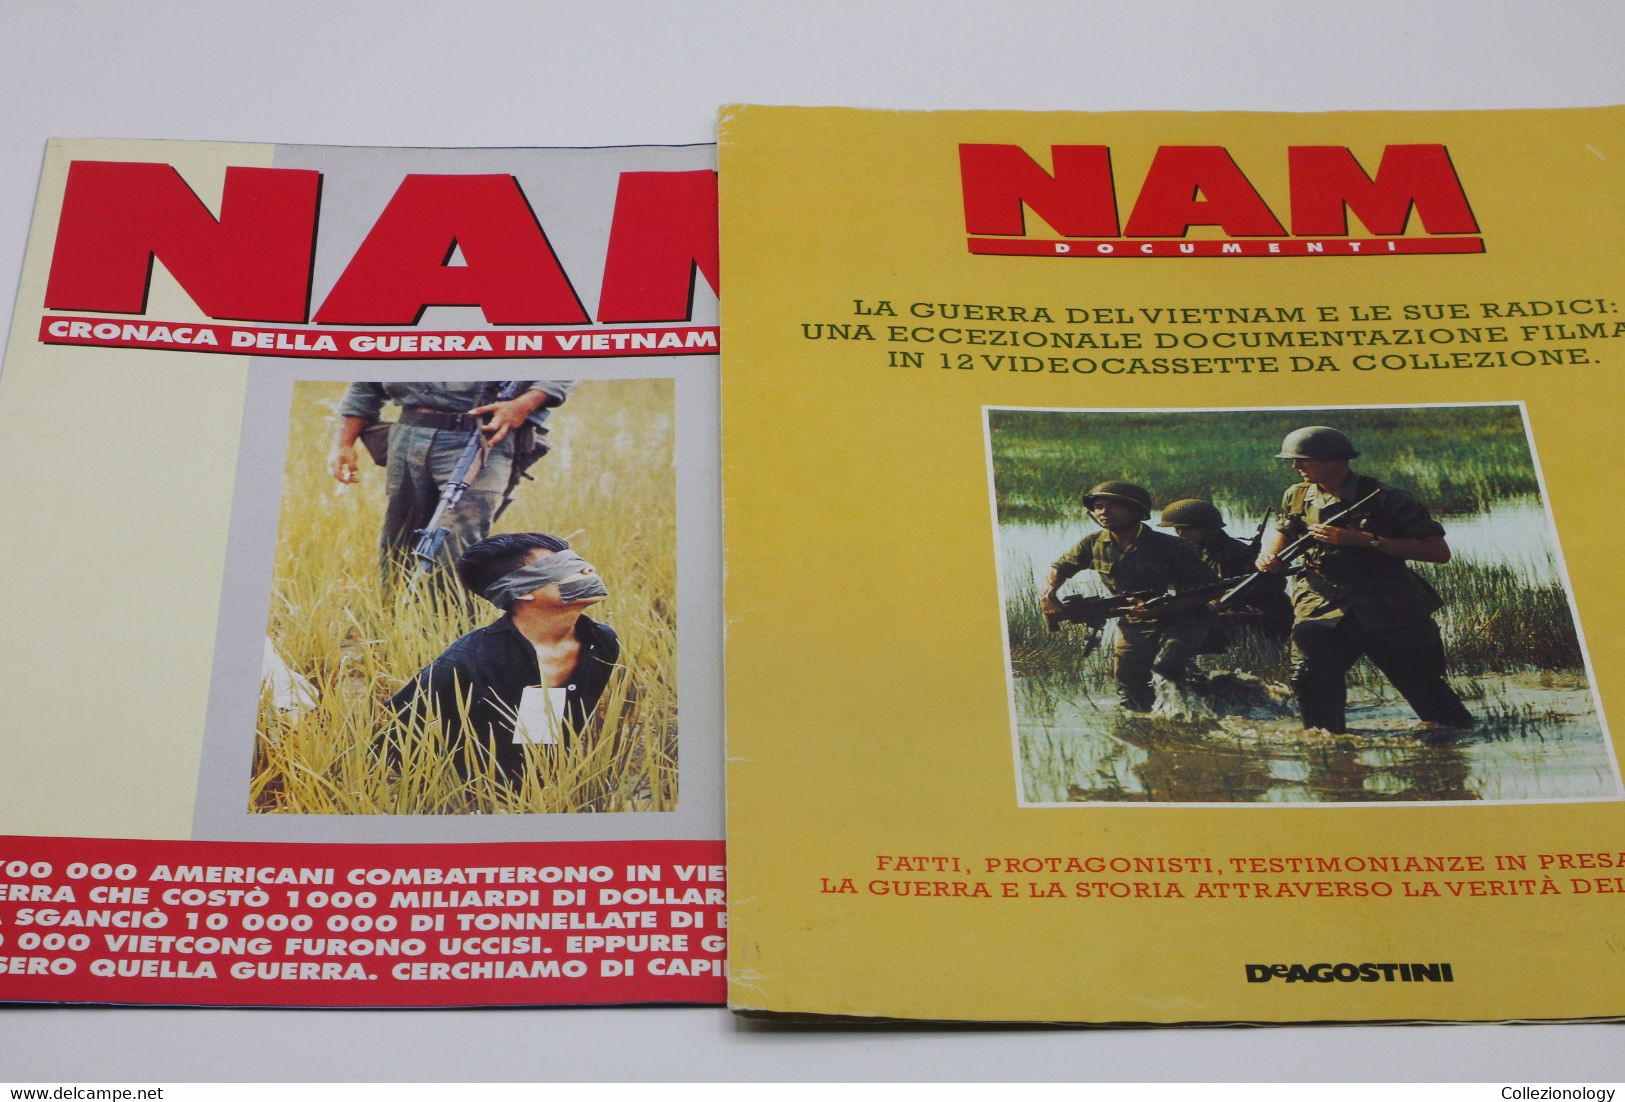 NAM CRONACA DELLA GUERRA IN VIETNAM 1965-1975  #1 DE AGOSTINI ATLAS 1998 CON POSTER Chronicle Of Vietnam War Guerre - Italiano